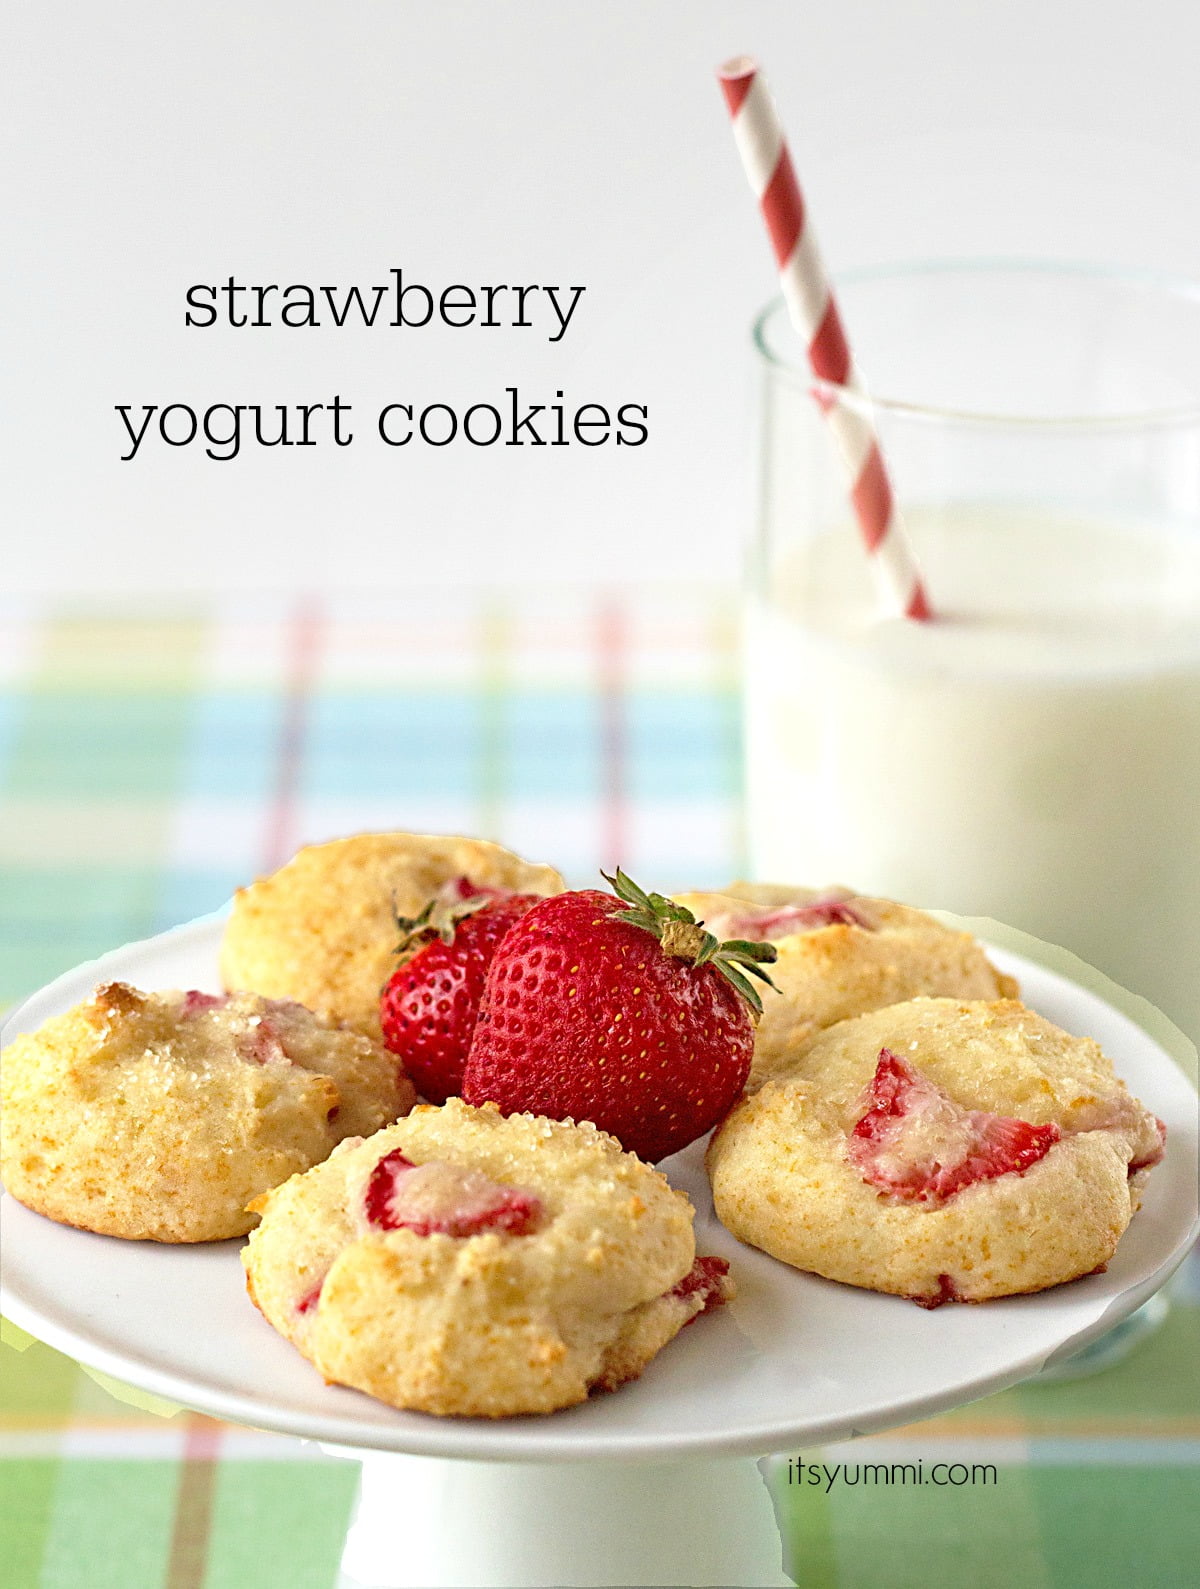 Strawberry Yogurt Cookies from ItsYummi.com. #LowFat #ItsYummi #StonyfieldBlogger